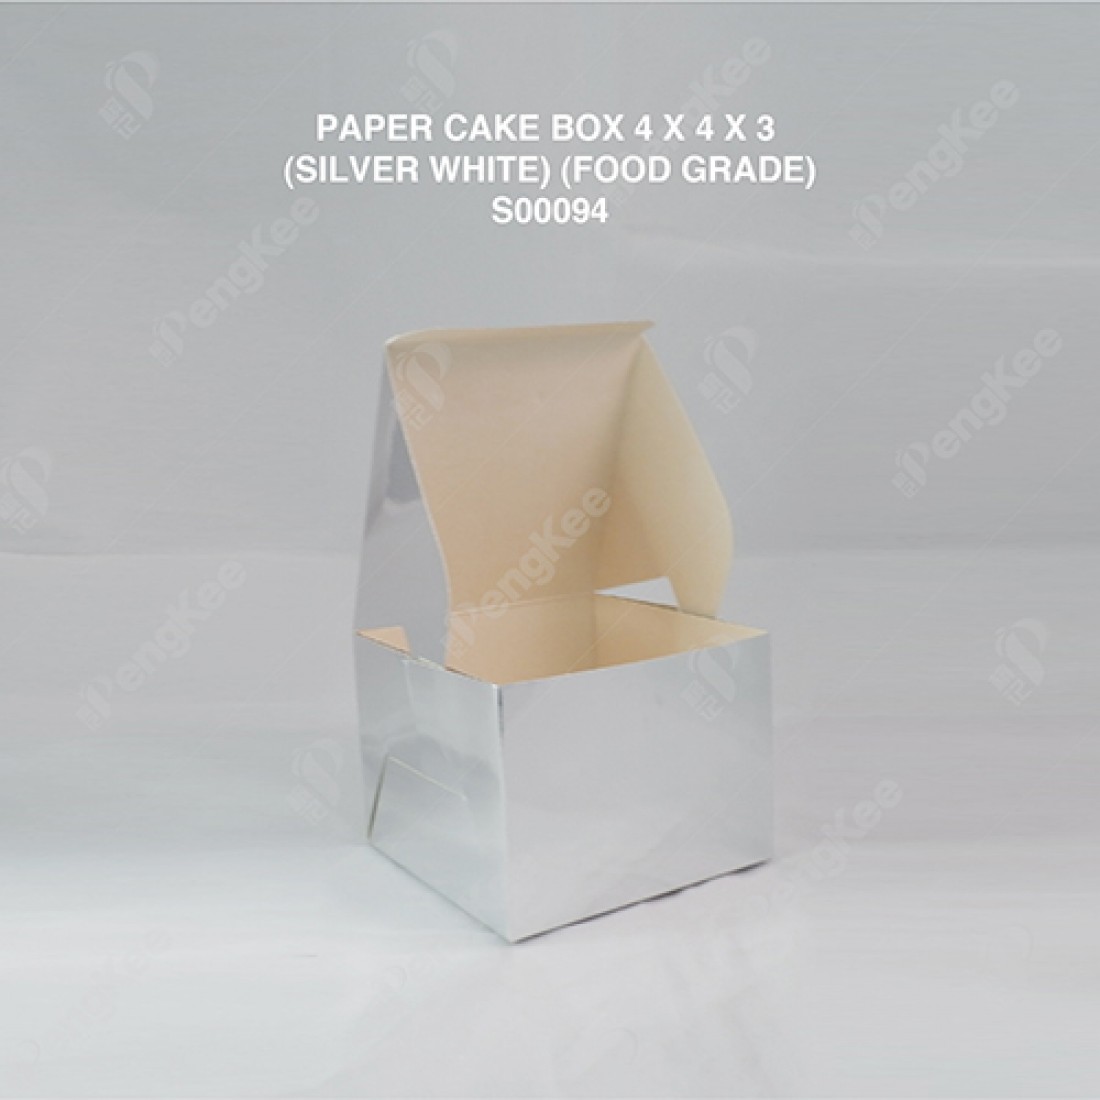 PAPER CAKE BOX 4 X 4 X 3 (SILVER WHITE) (food grade) (100'SPKT) (500'SBDL)